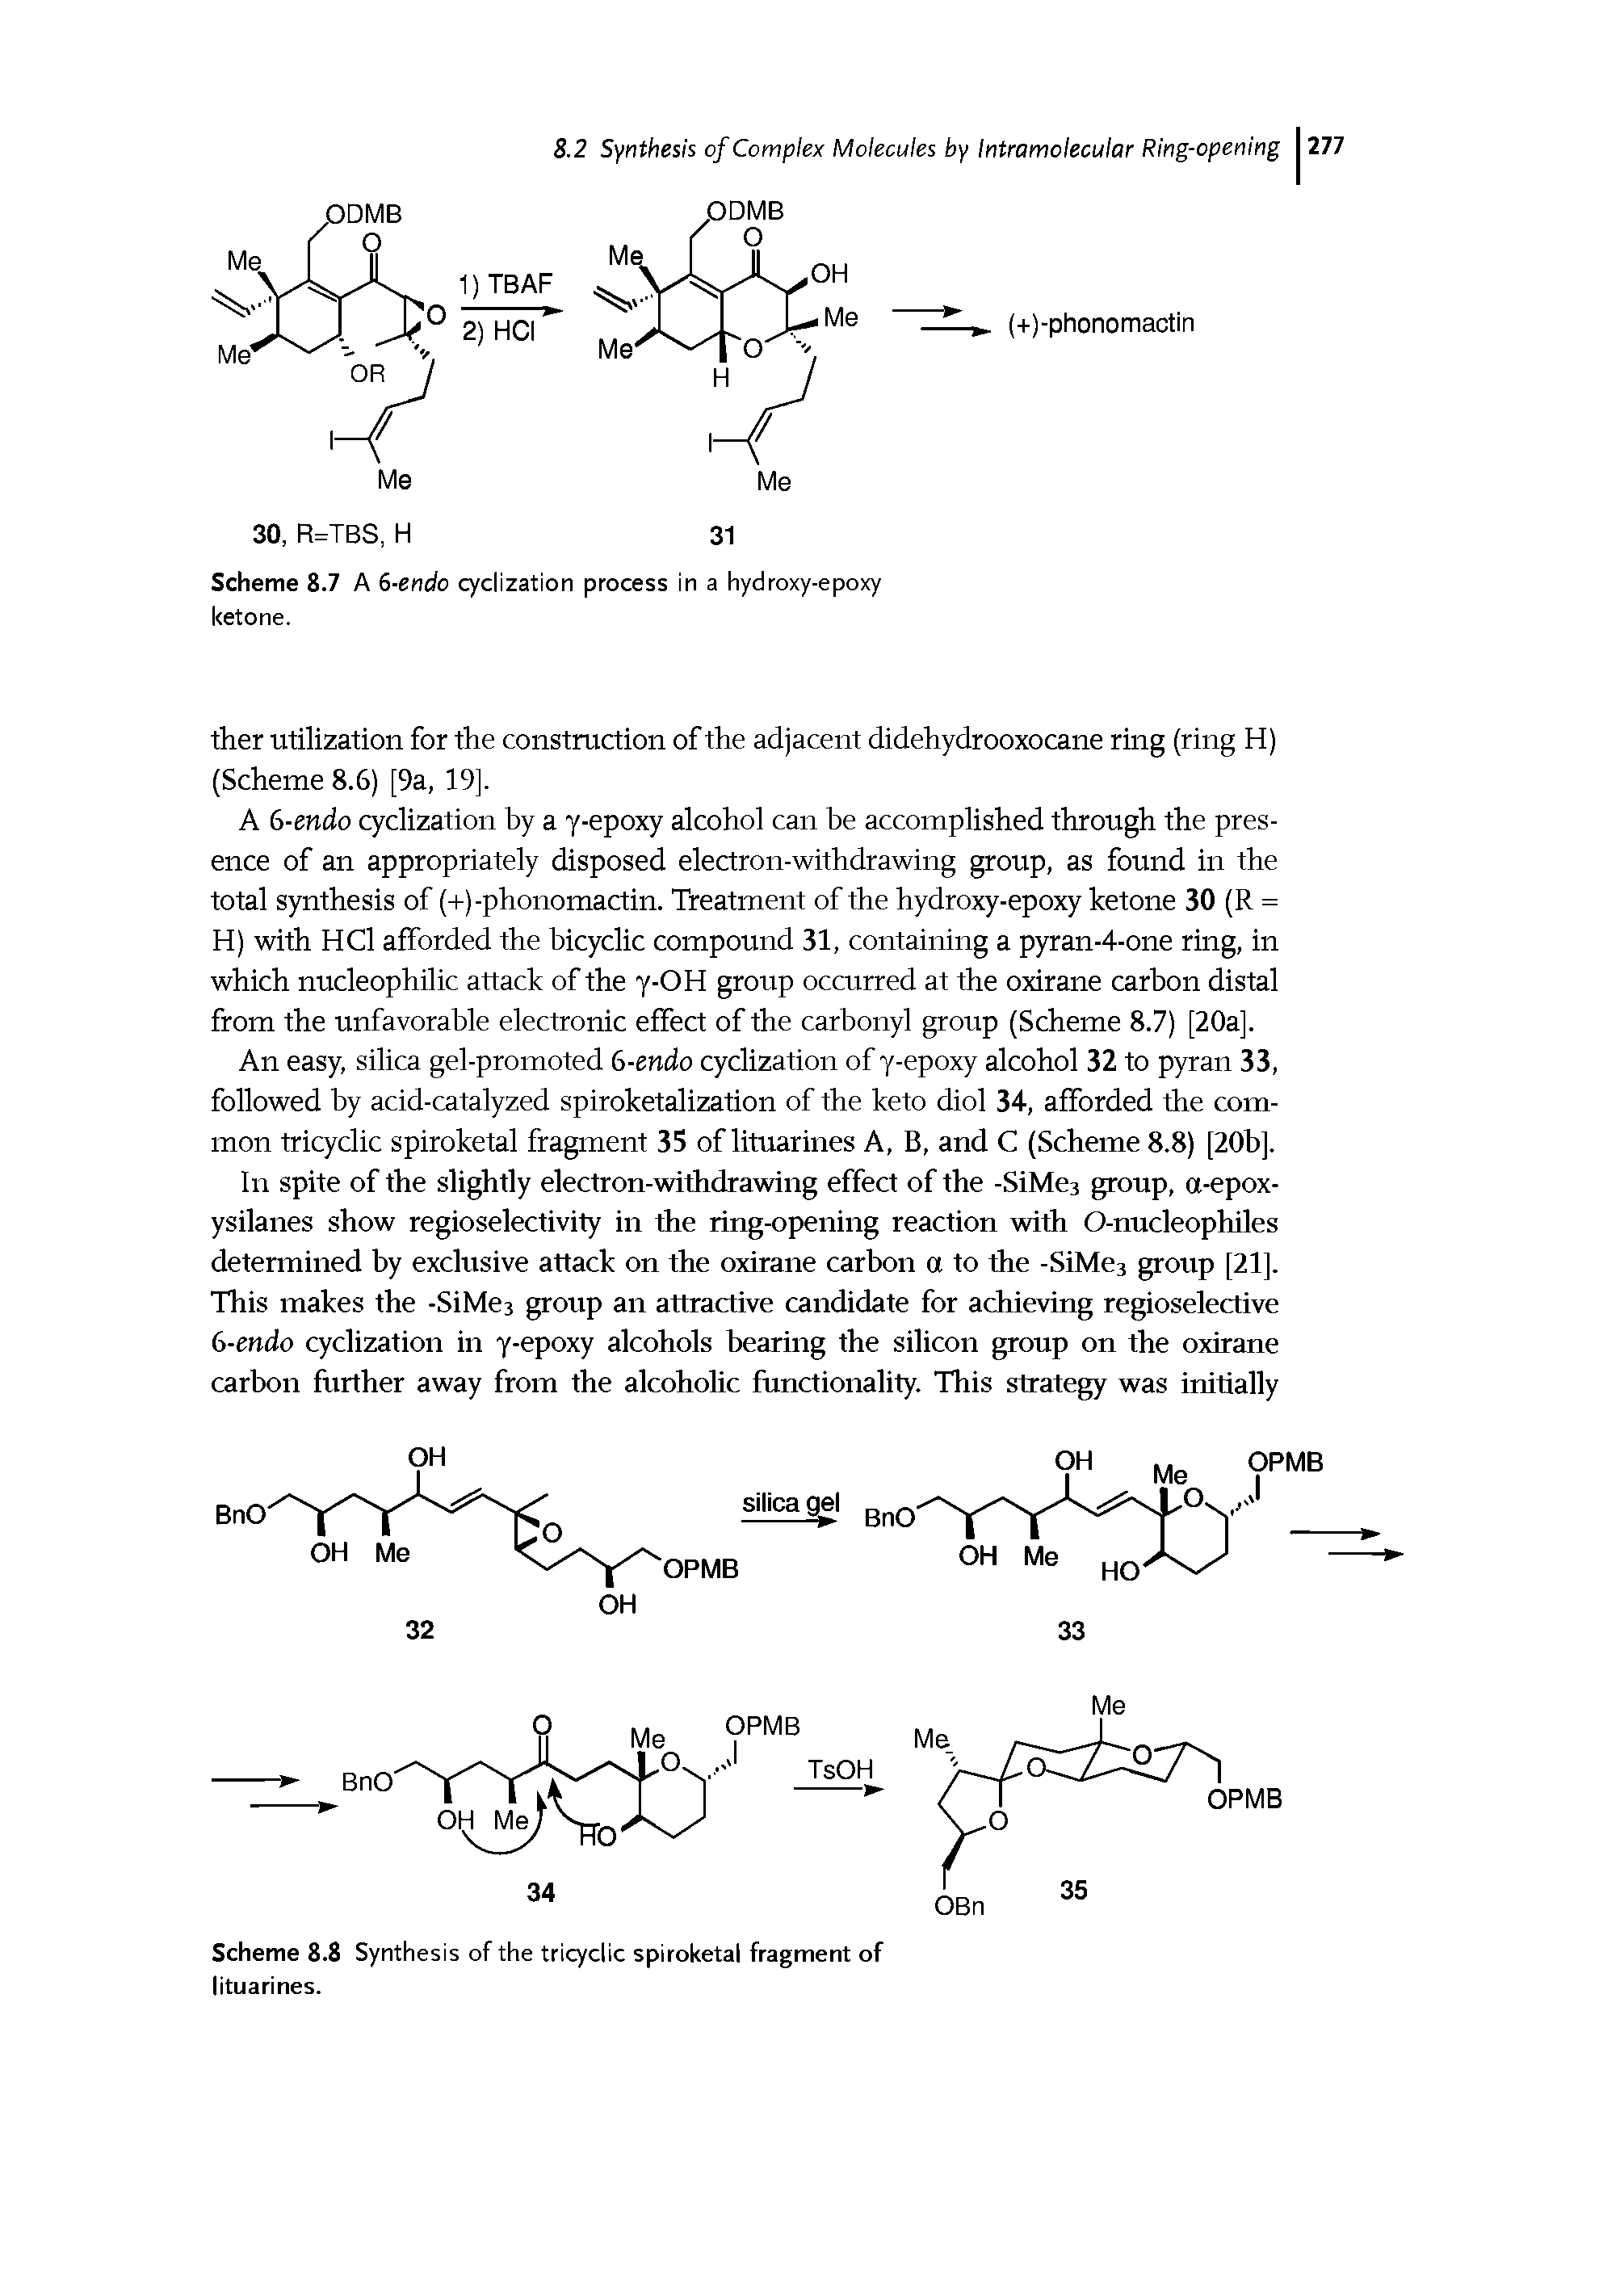 Scheme 8.8 Synthesis of the tricyclic spiroketal fragment of lituarines.